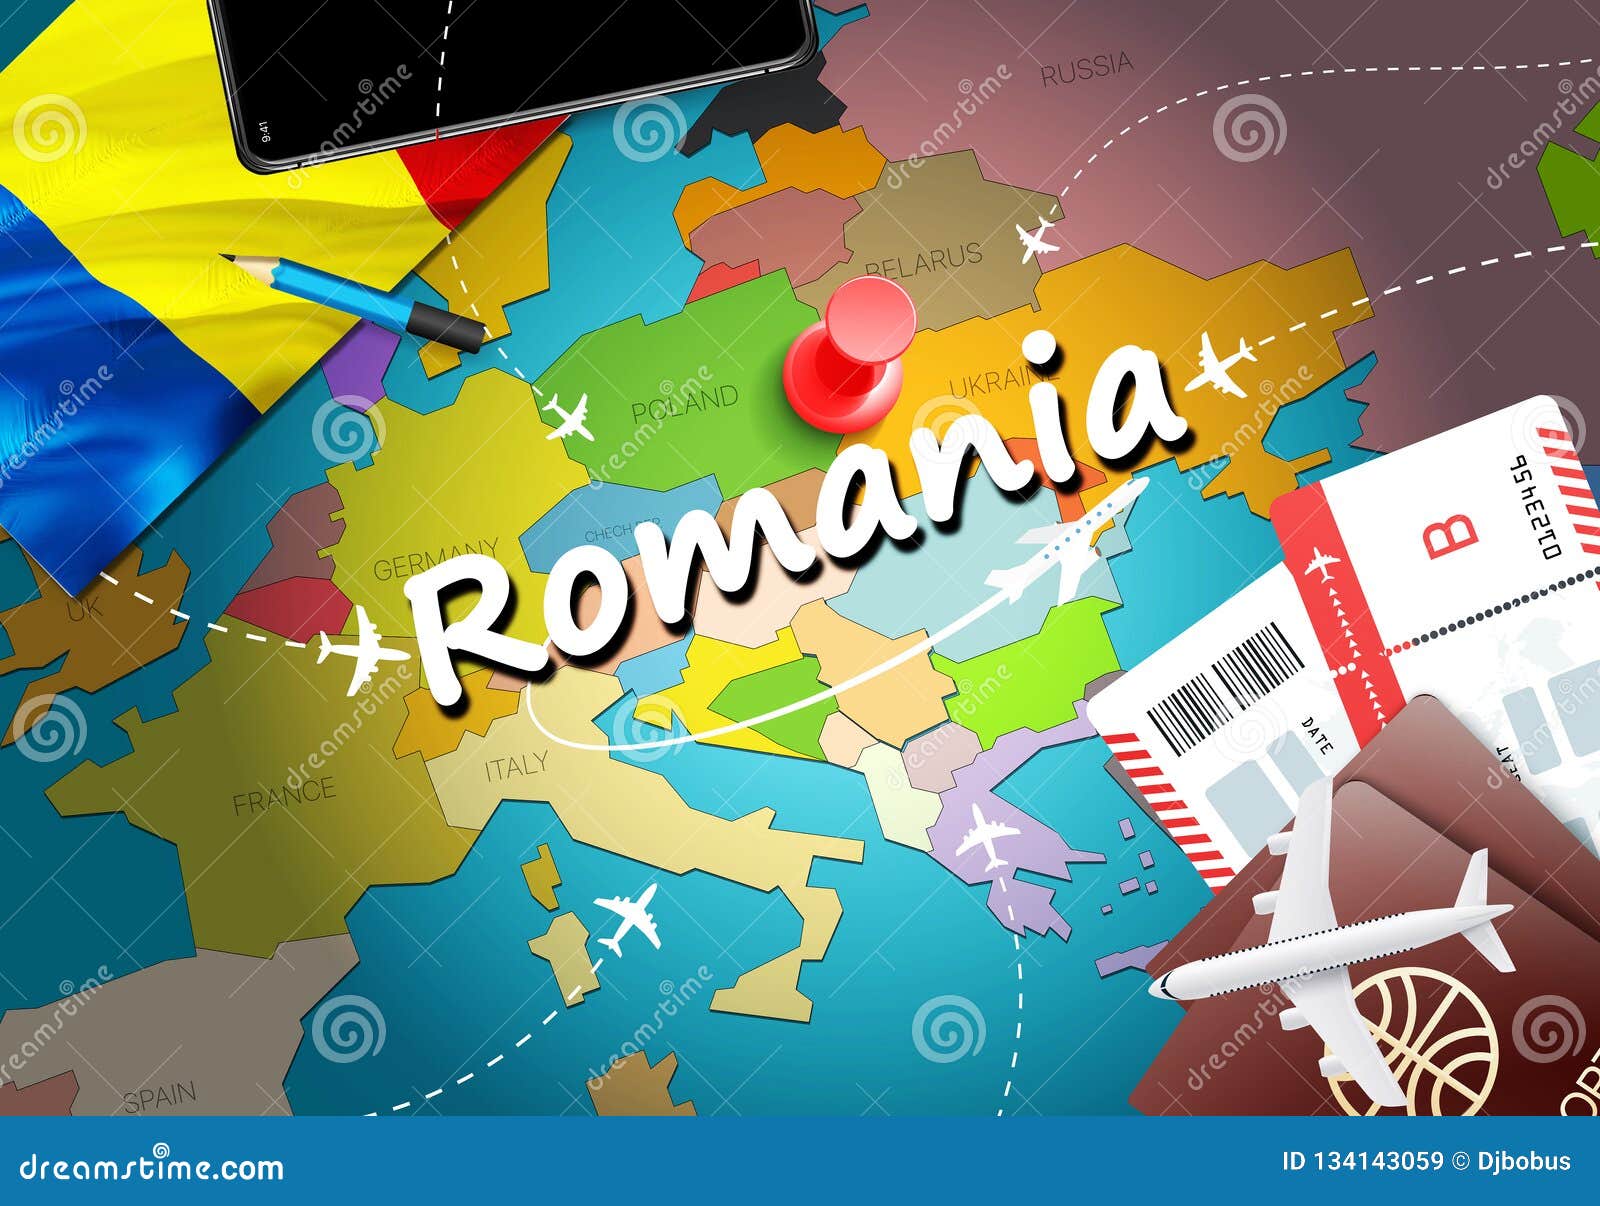 new concept travel romania